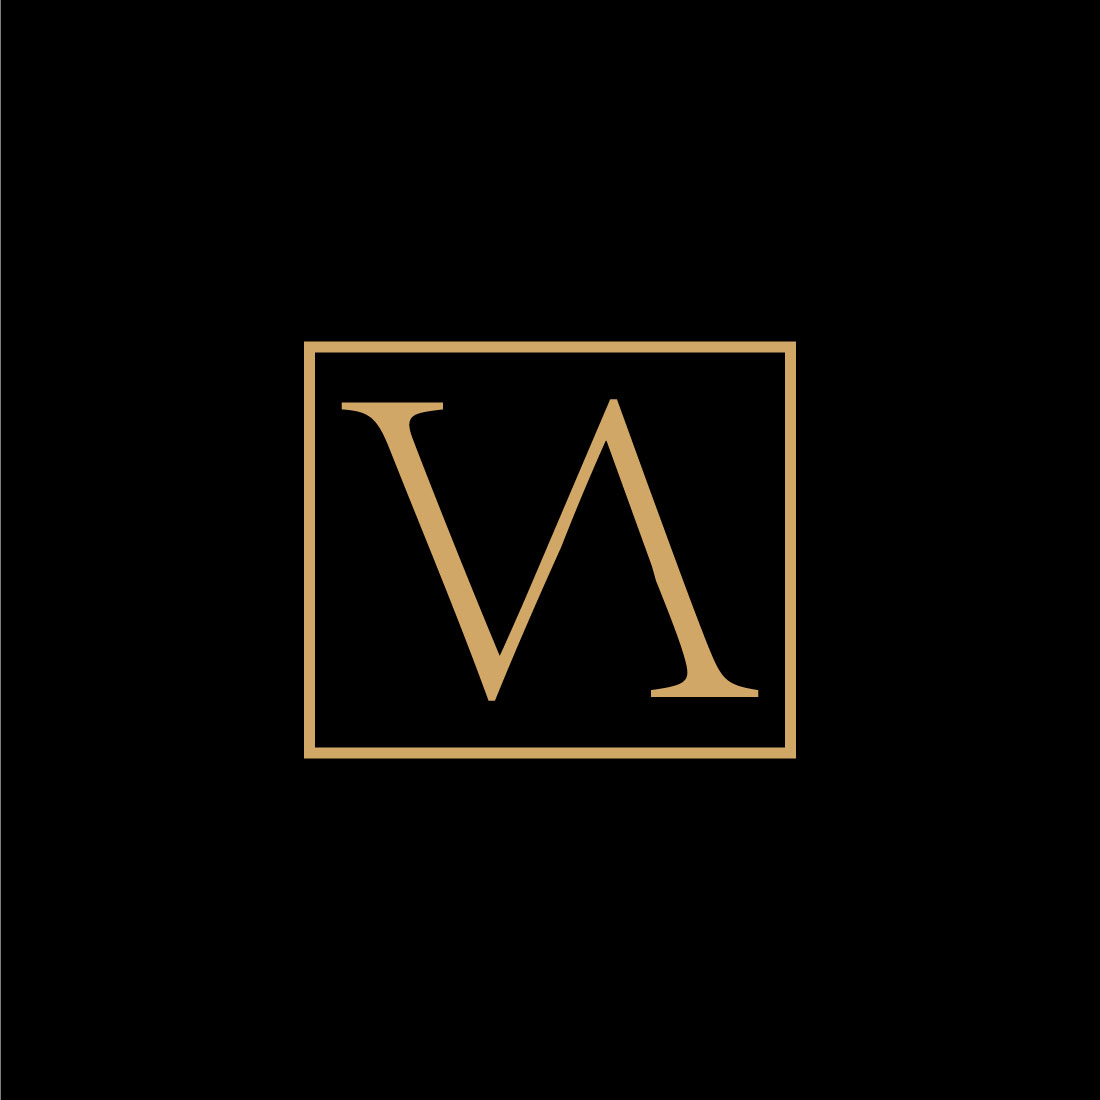 VA Logo Design Template cover image.